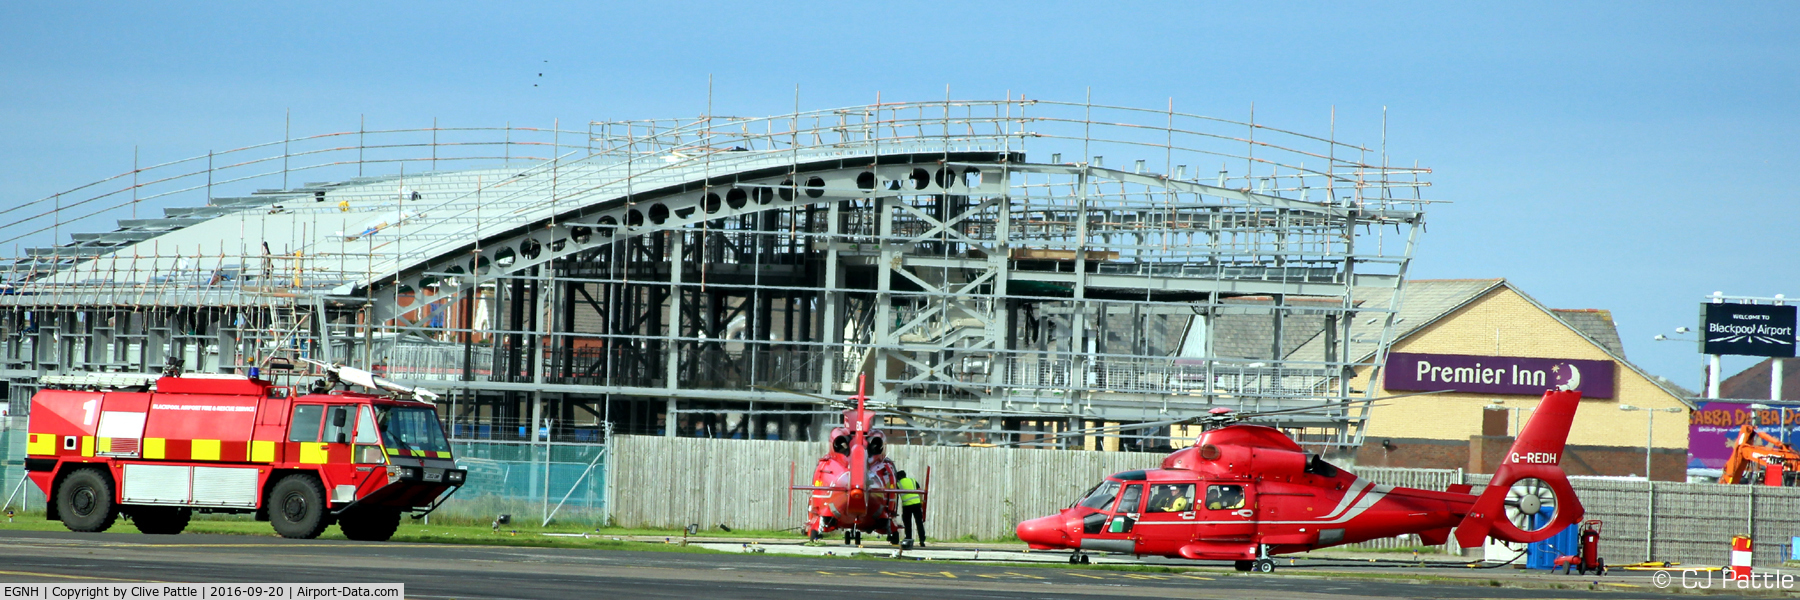 Blackpool International Airport, Blackpool, England United Kingdom (EGNH) - The Bond Helicopters apron at Blackpool EGNH